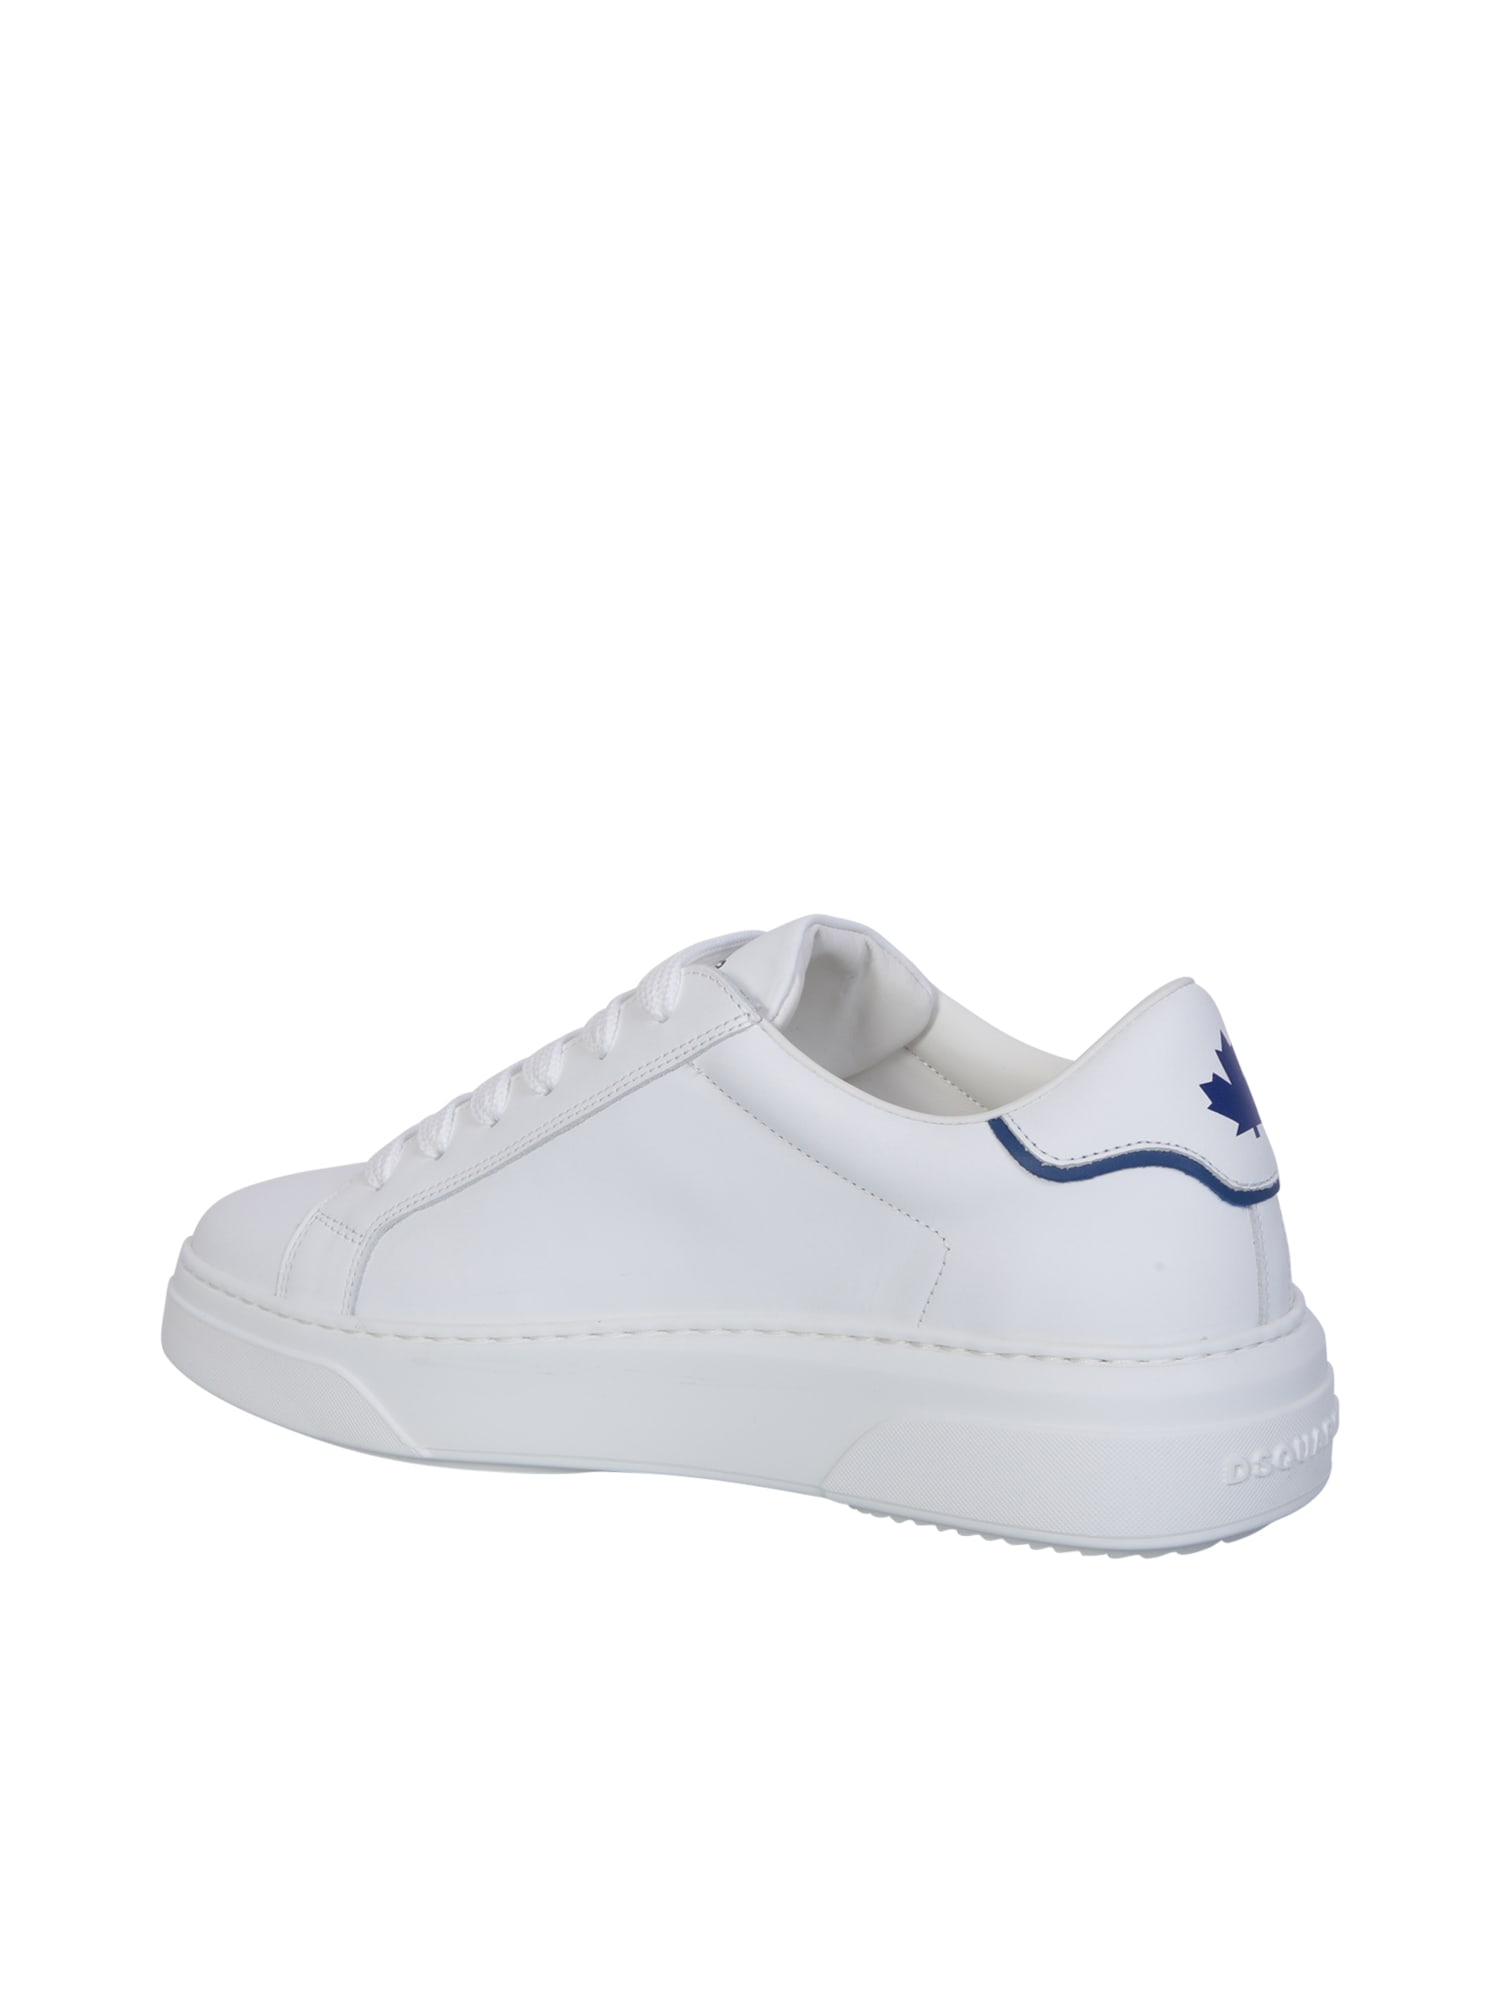 Shop Dsquared2 Bumper White/blue Sneakers